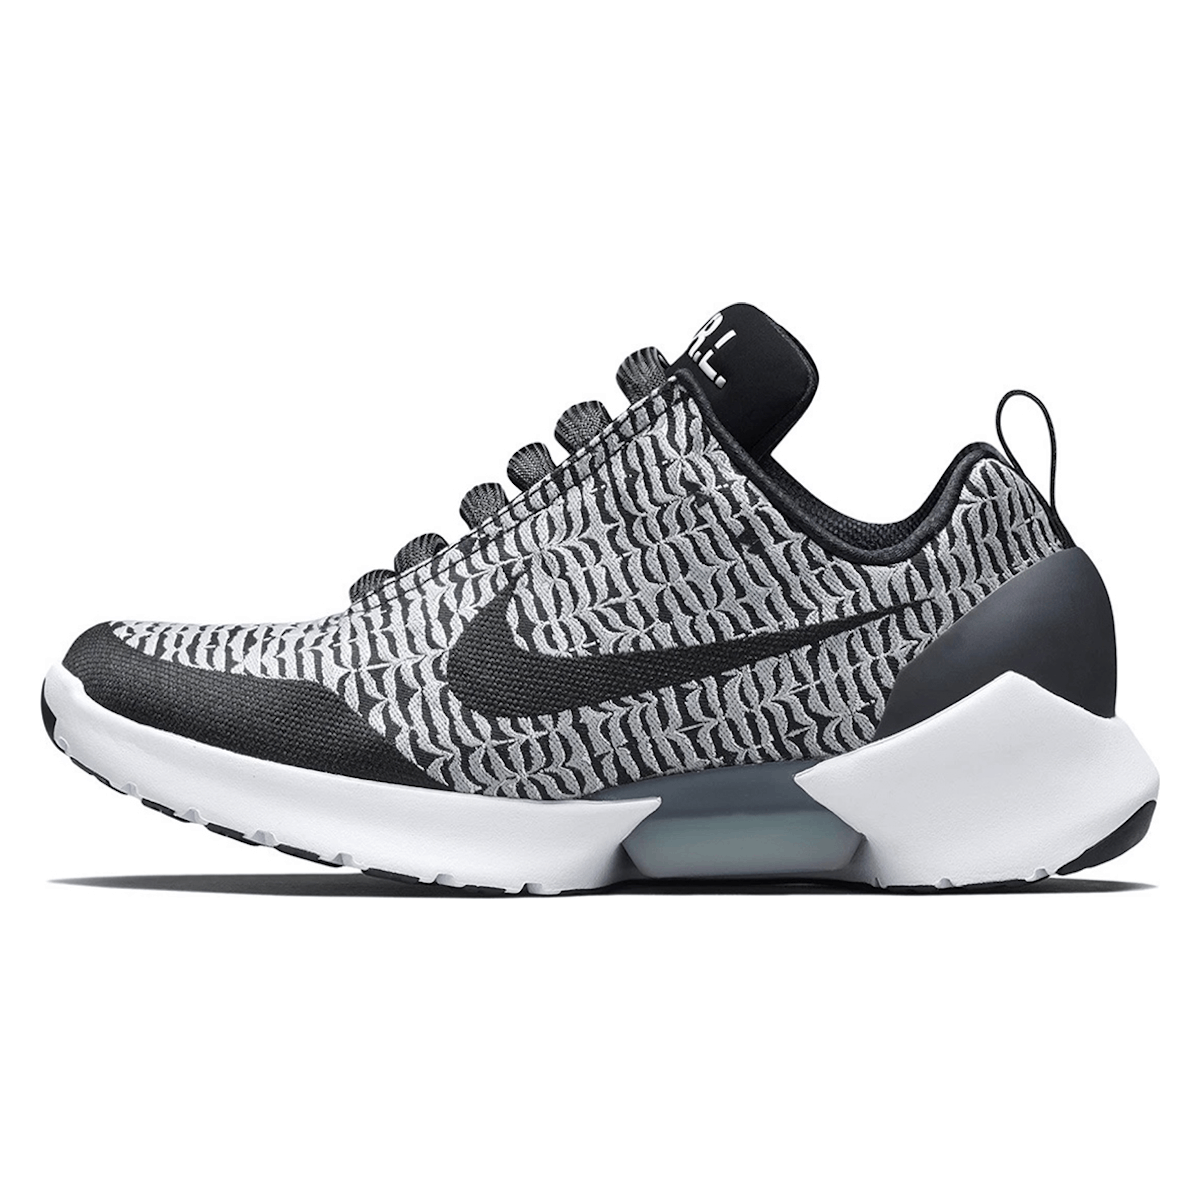 Nike Hyperadapt 1.0 Black/Wolf Grey